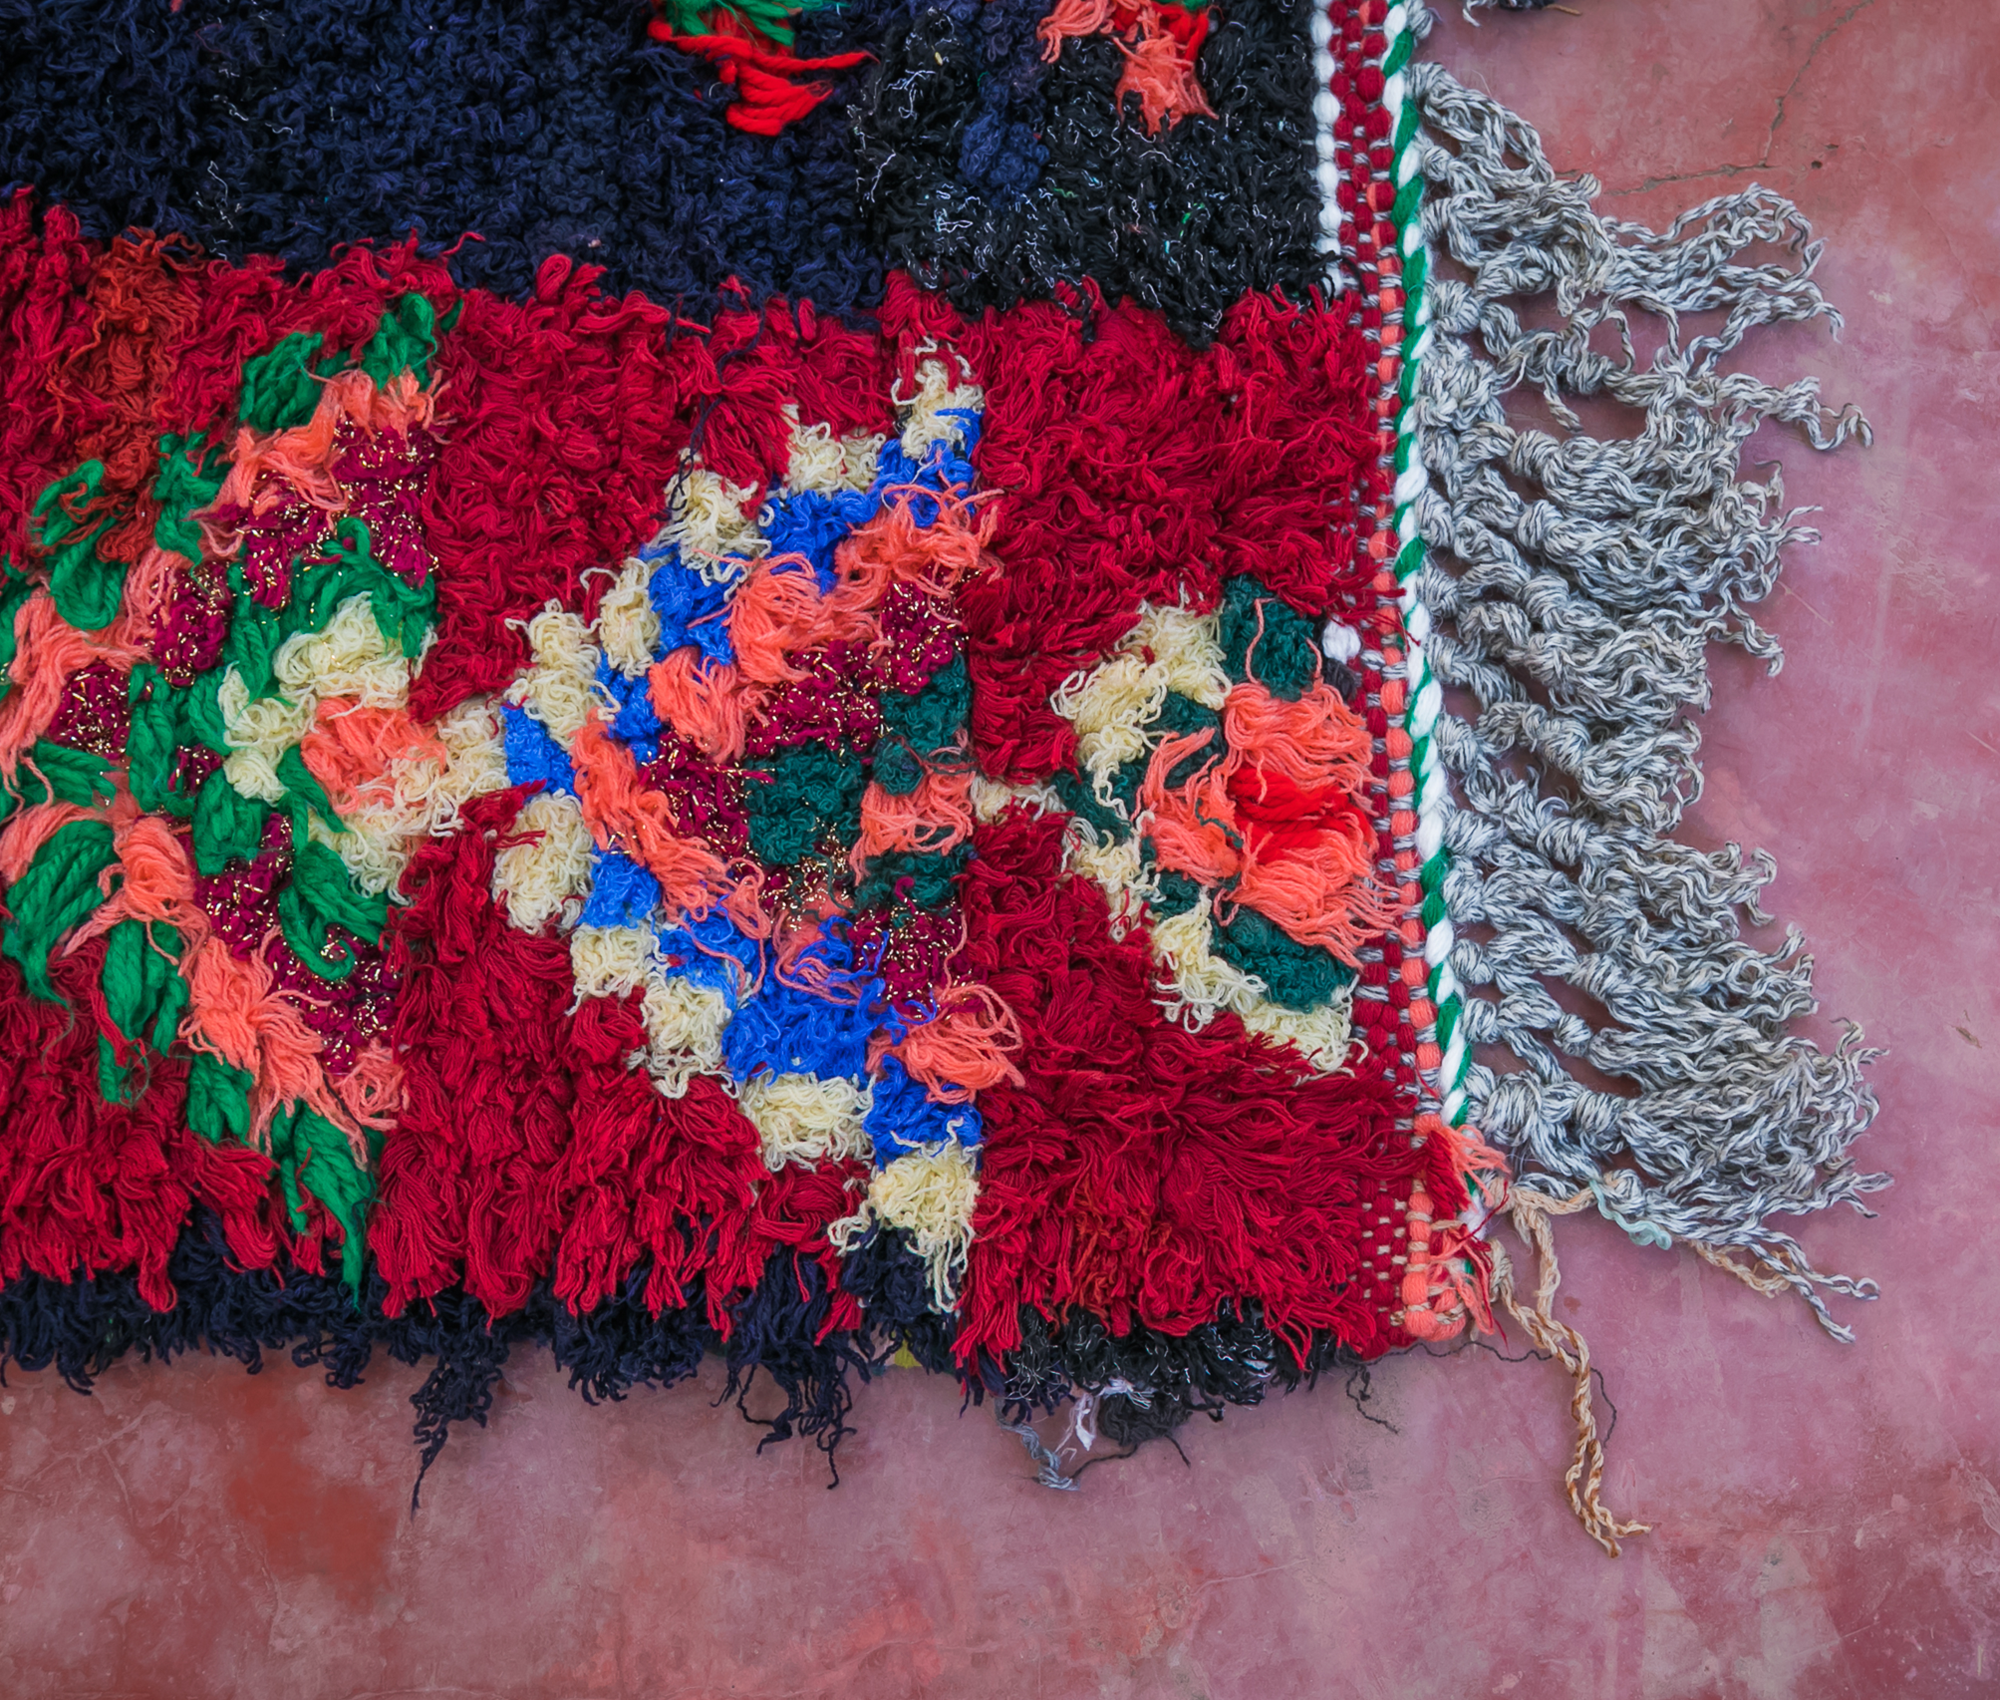 Home Decor Colorful Triangles Moroccan Rug